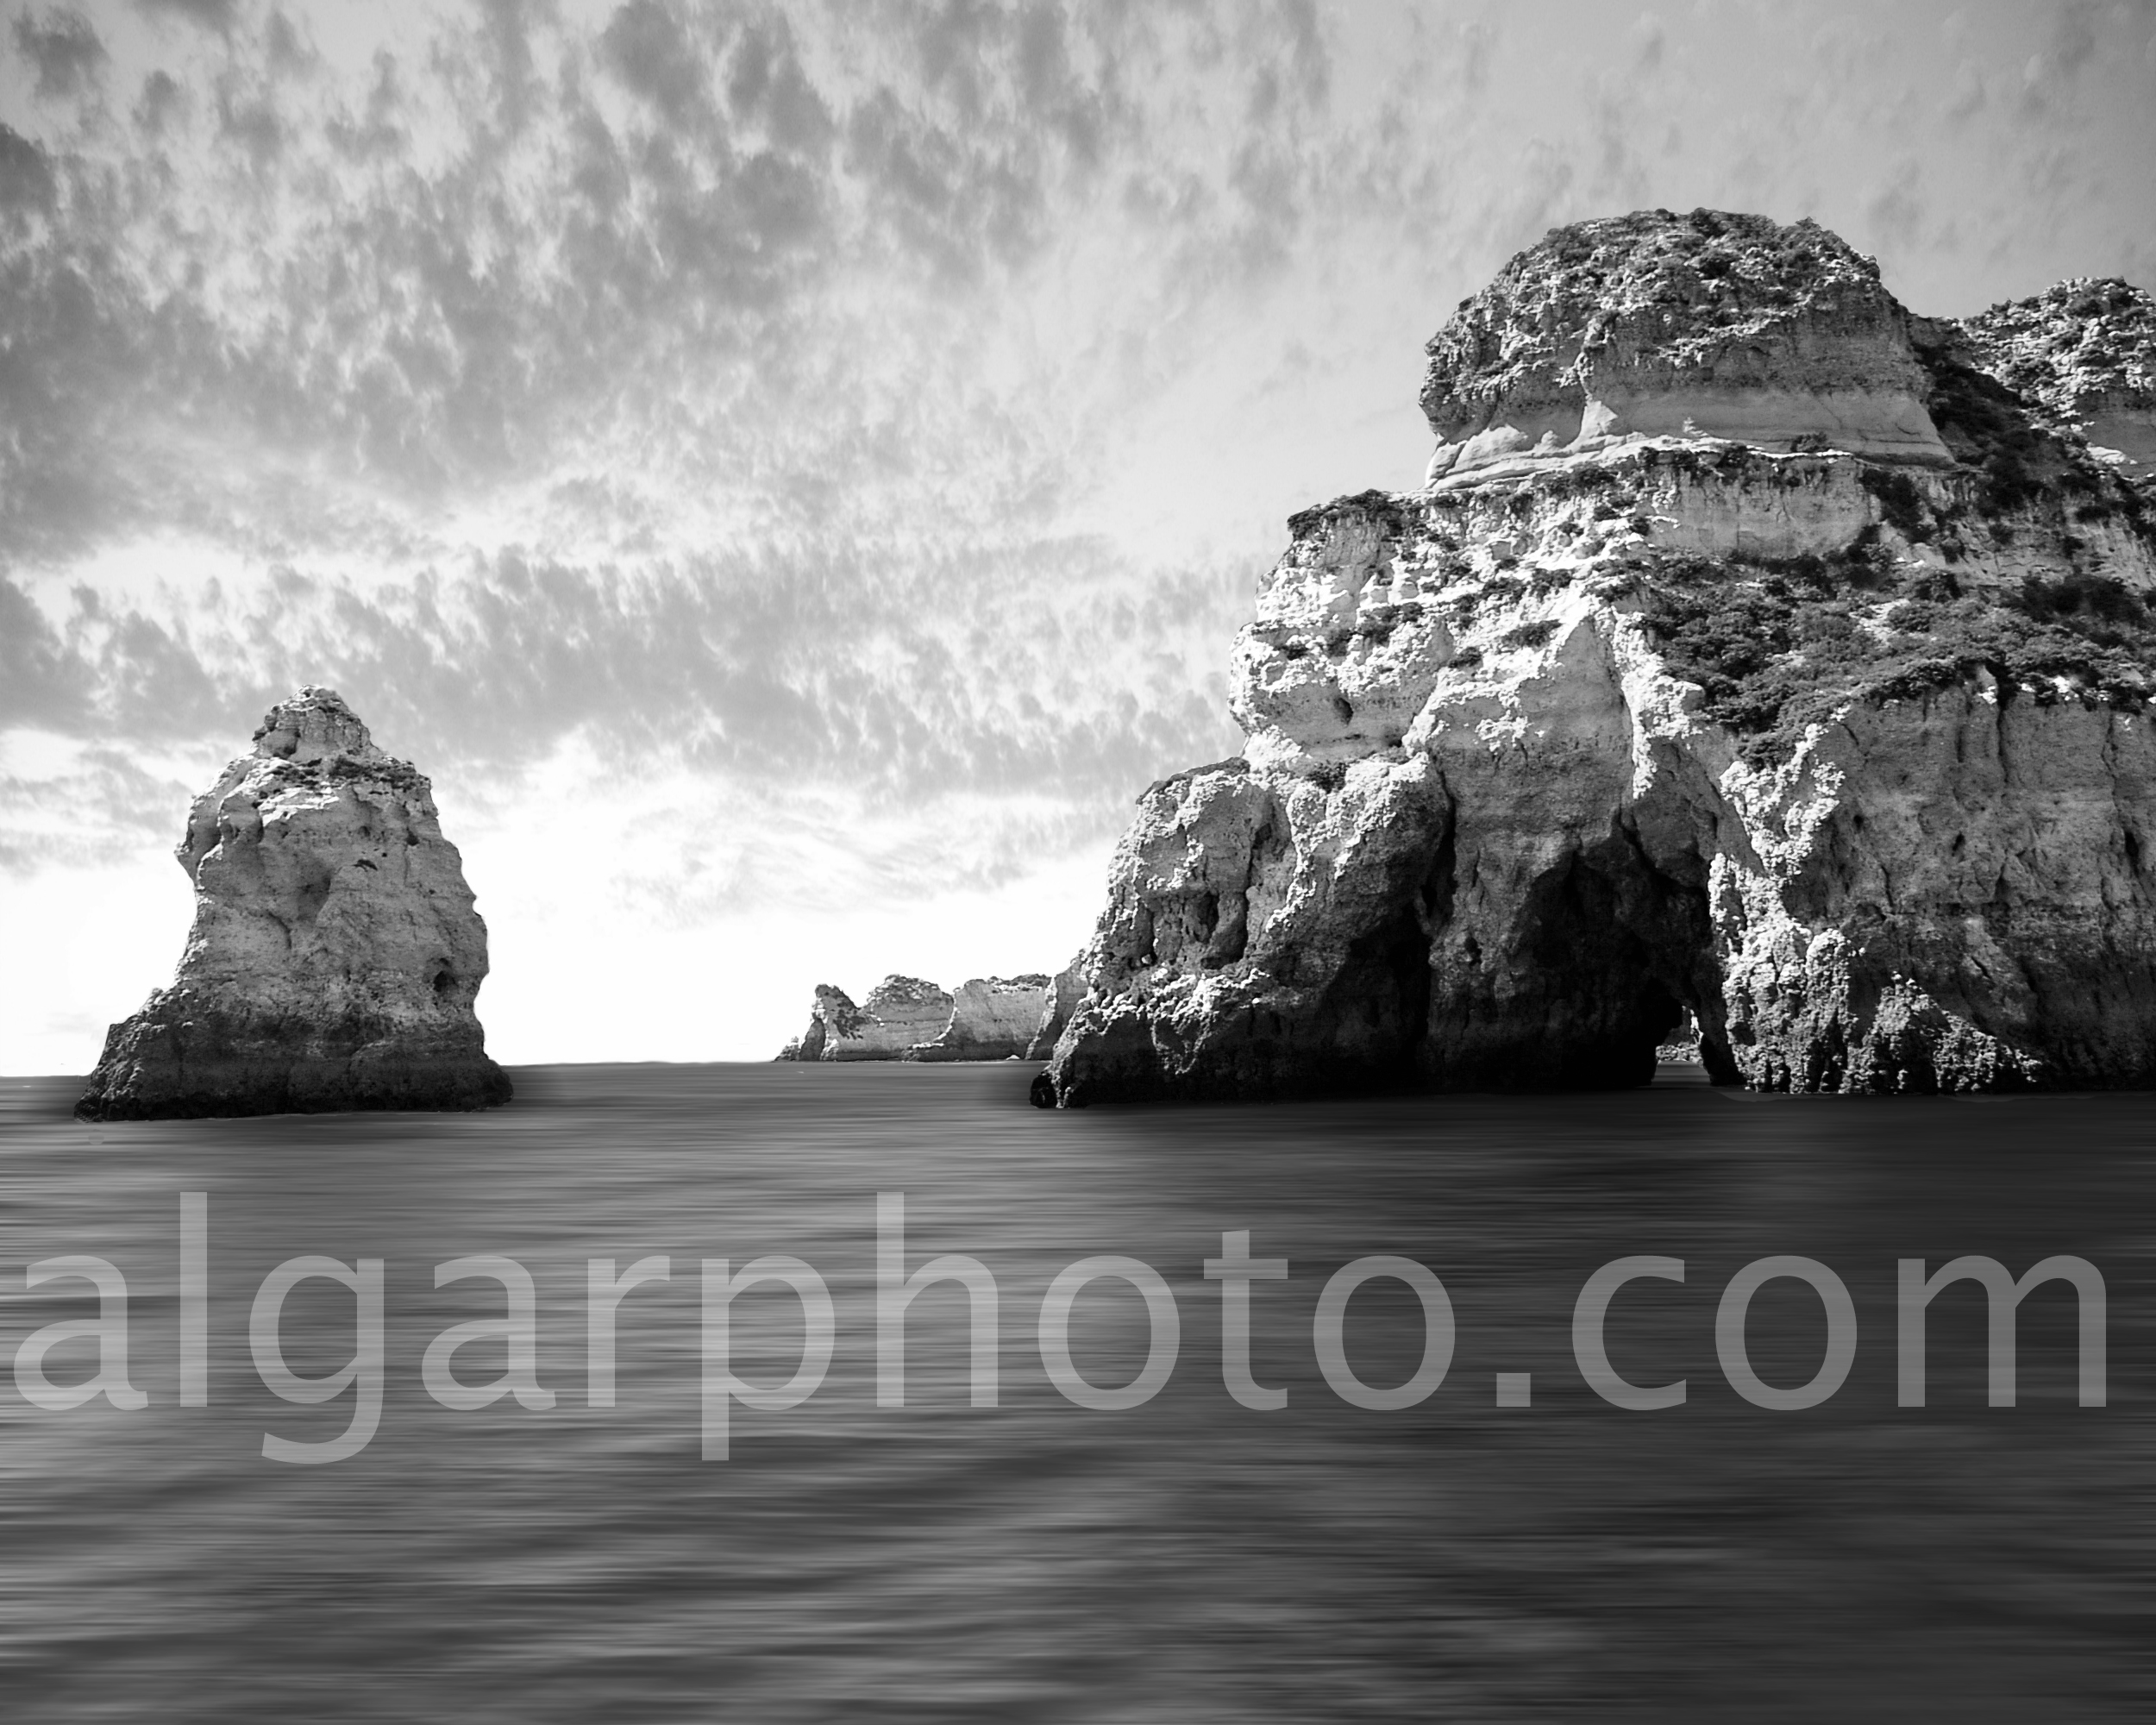 Algarve photography seascape mono